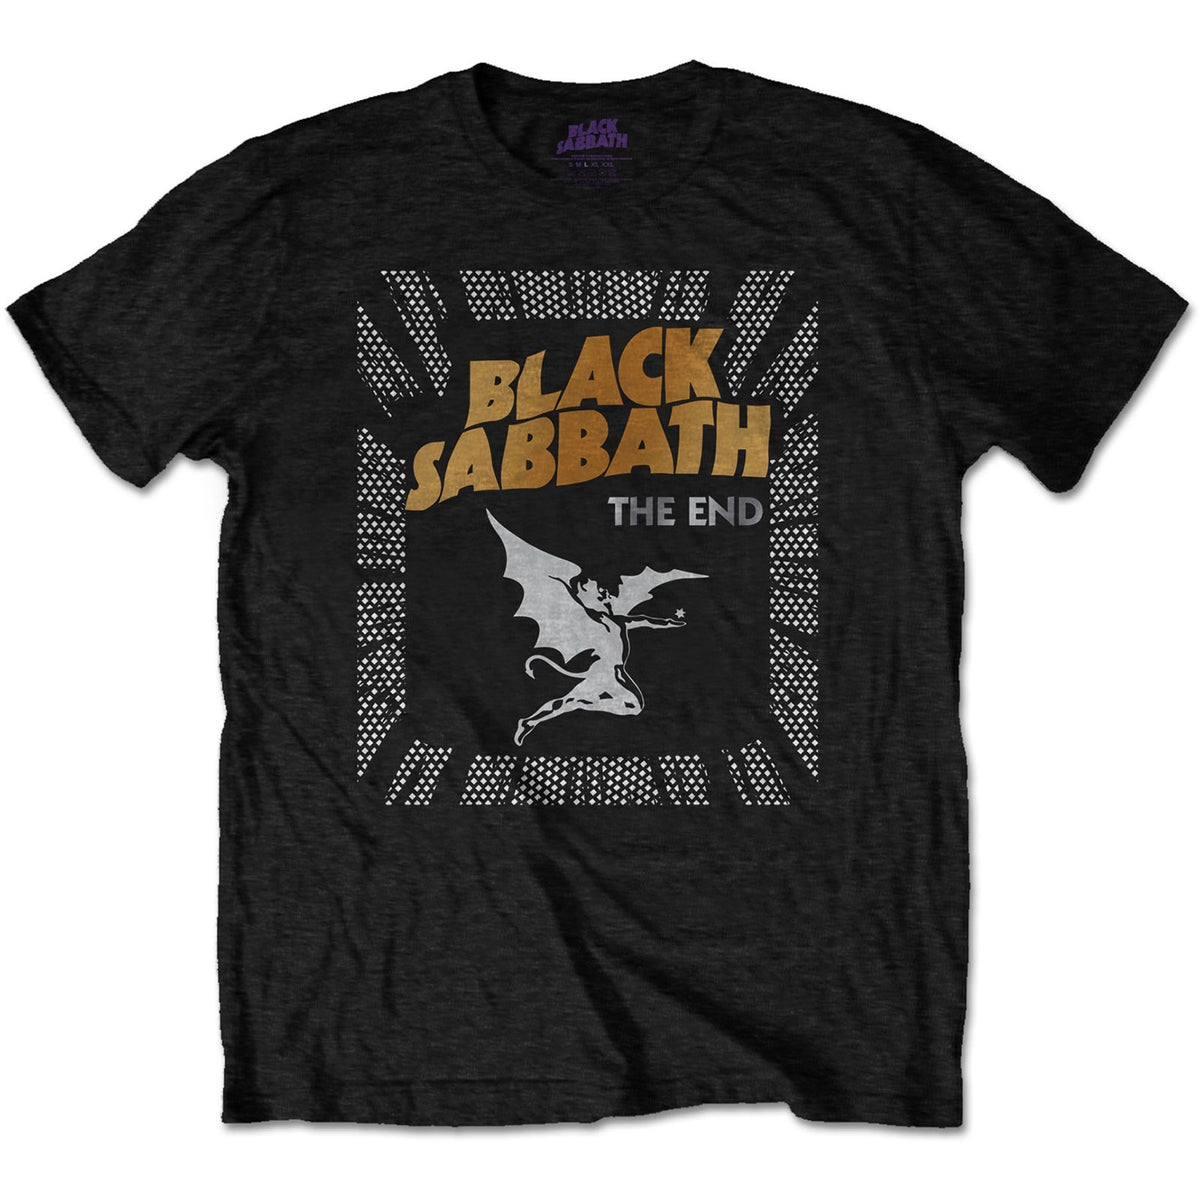 Black Sabbath The End Demon Black Tee